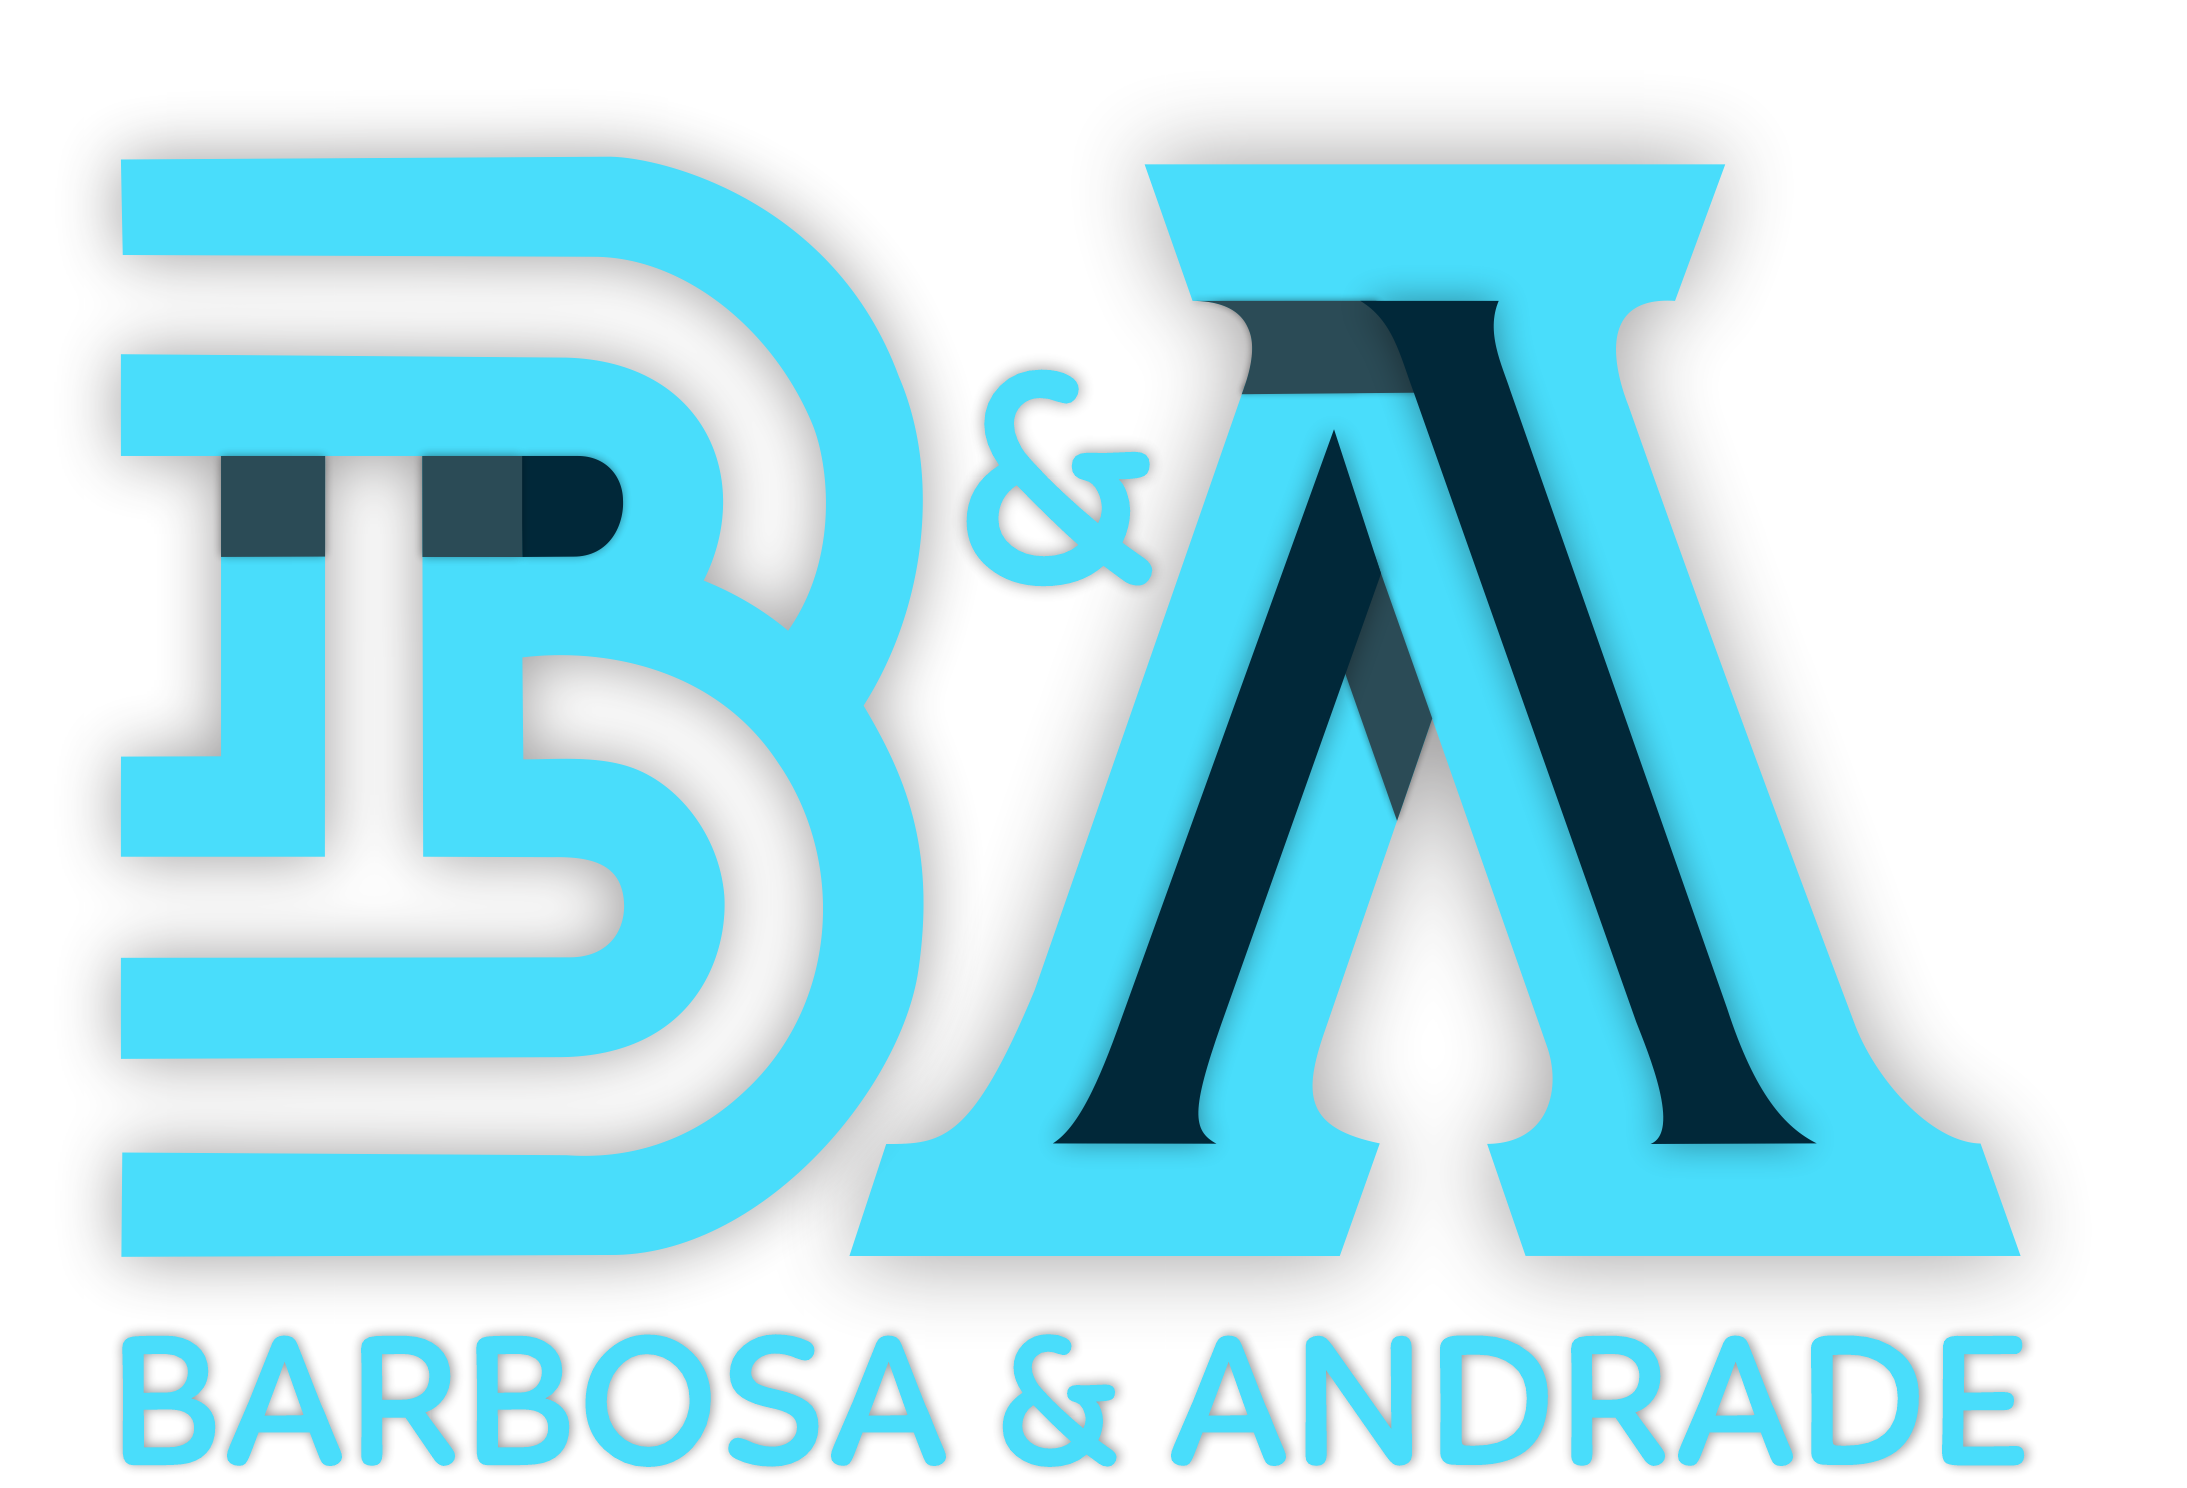 Barbosa & Andrade